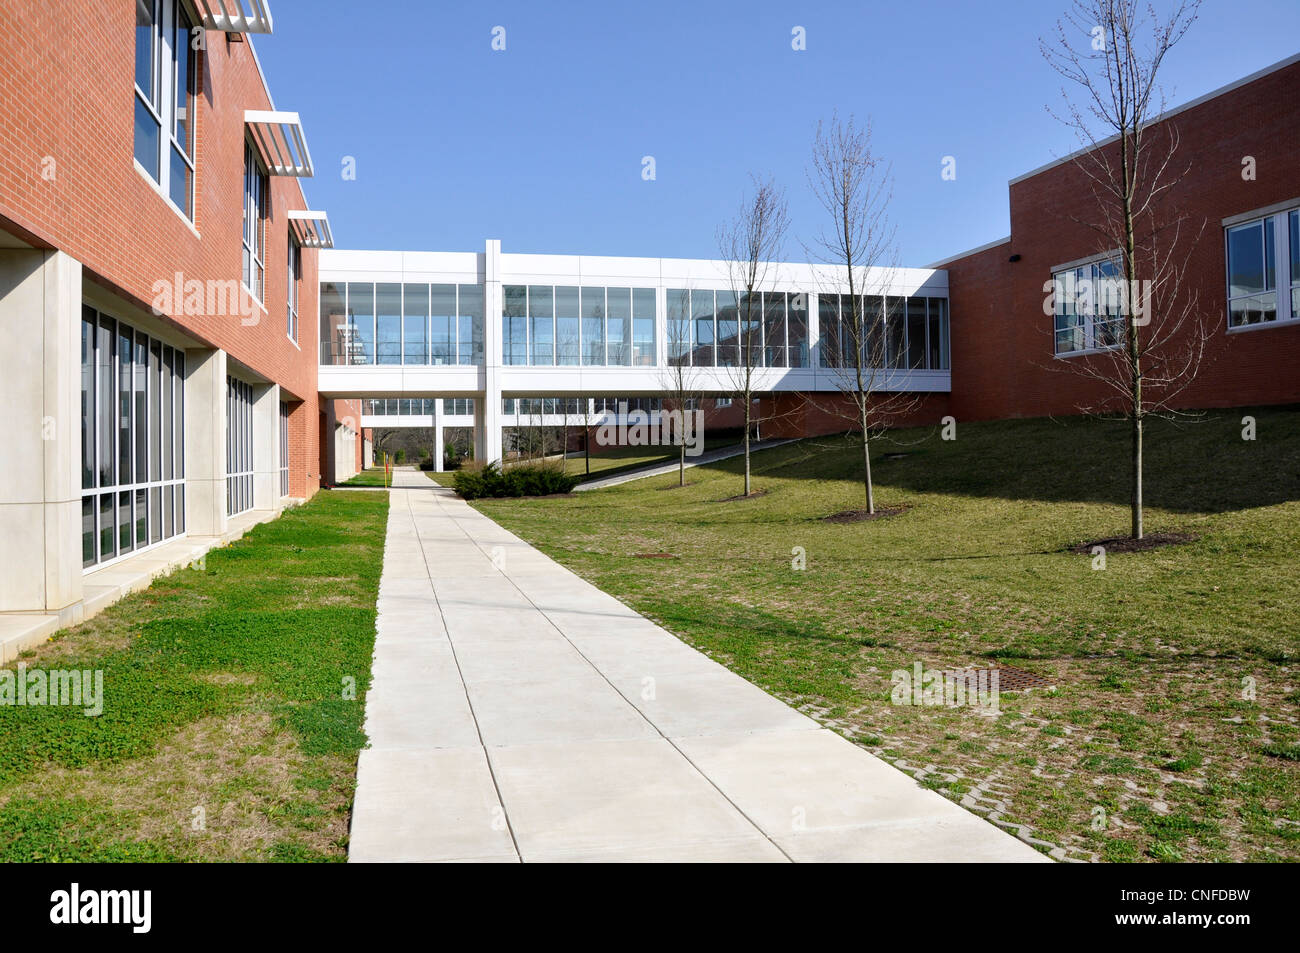 enclosed crosswalks connecting two red brick school buildings Stock Photo